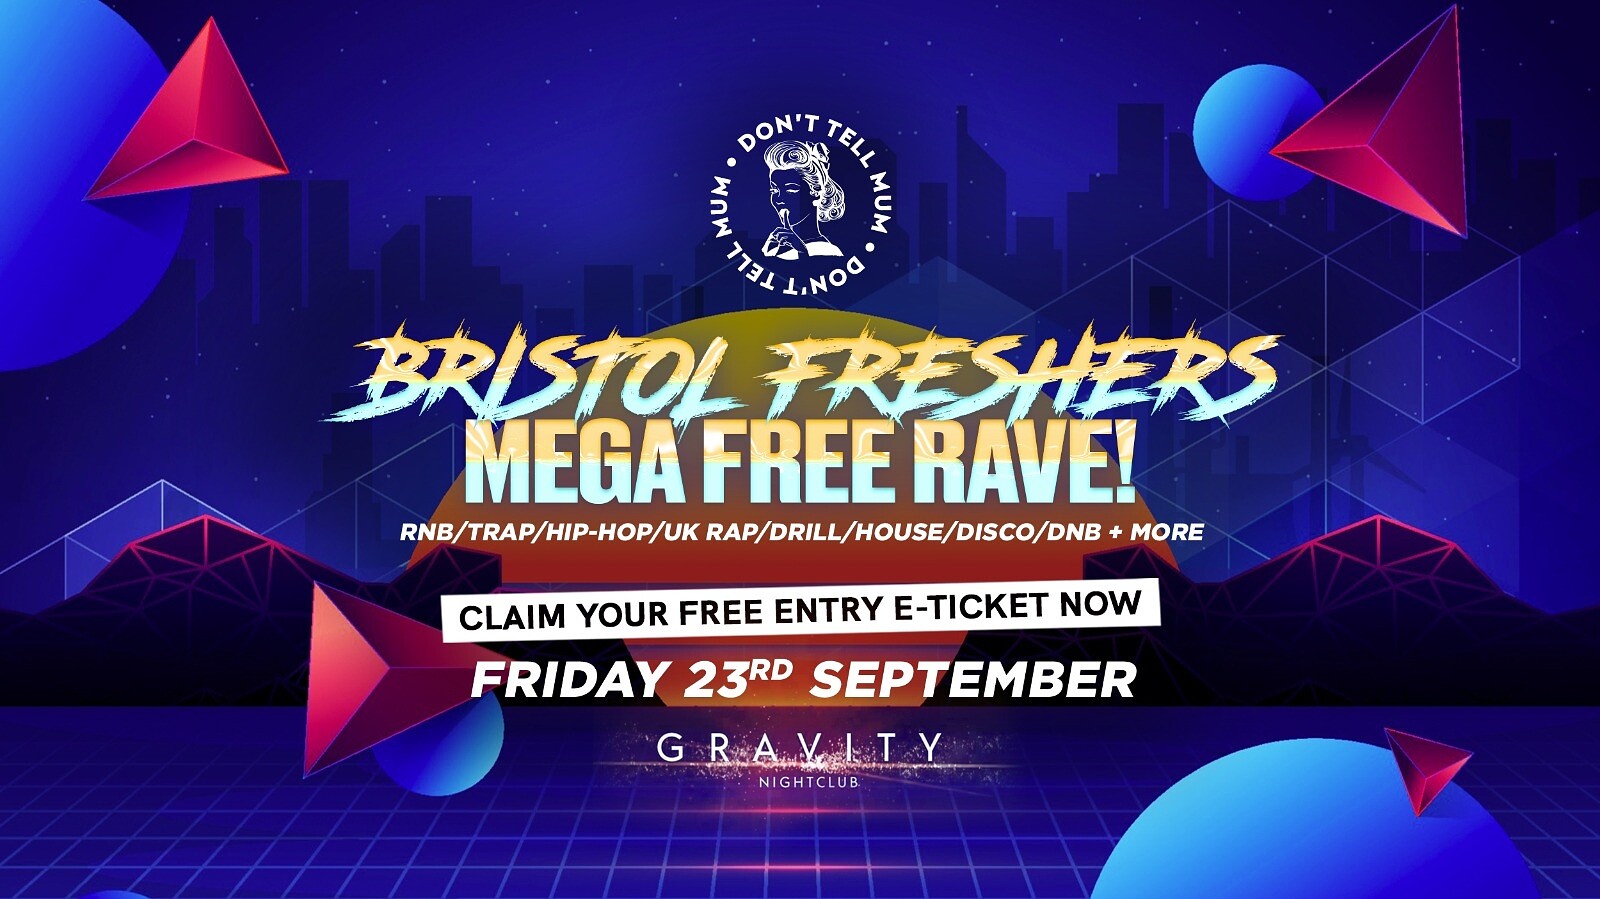 DTM Bristol • Freshers Mega FREE RAVE at Gravity Bristol